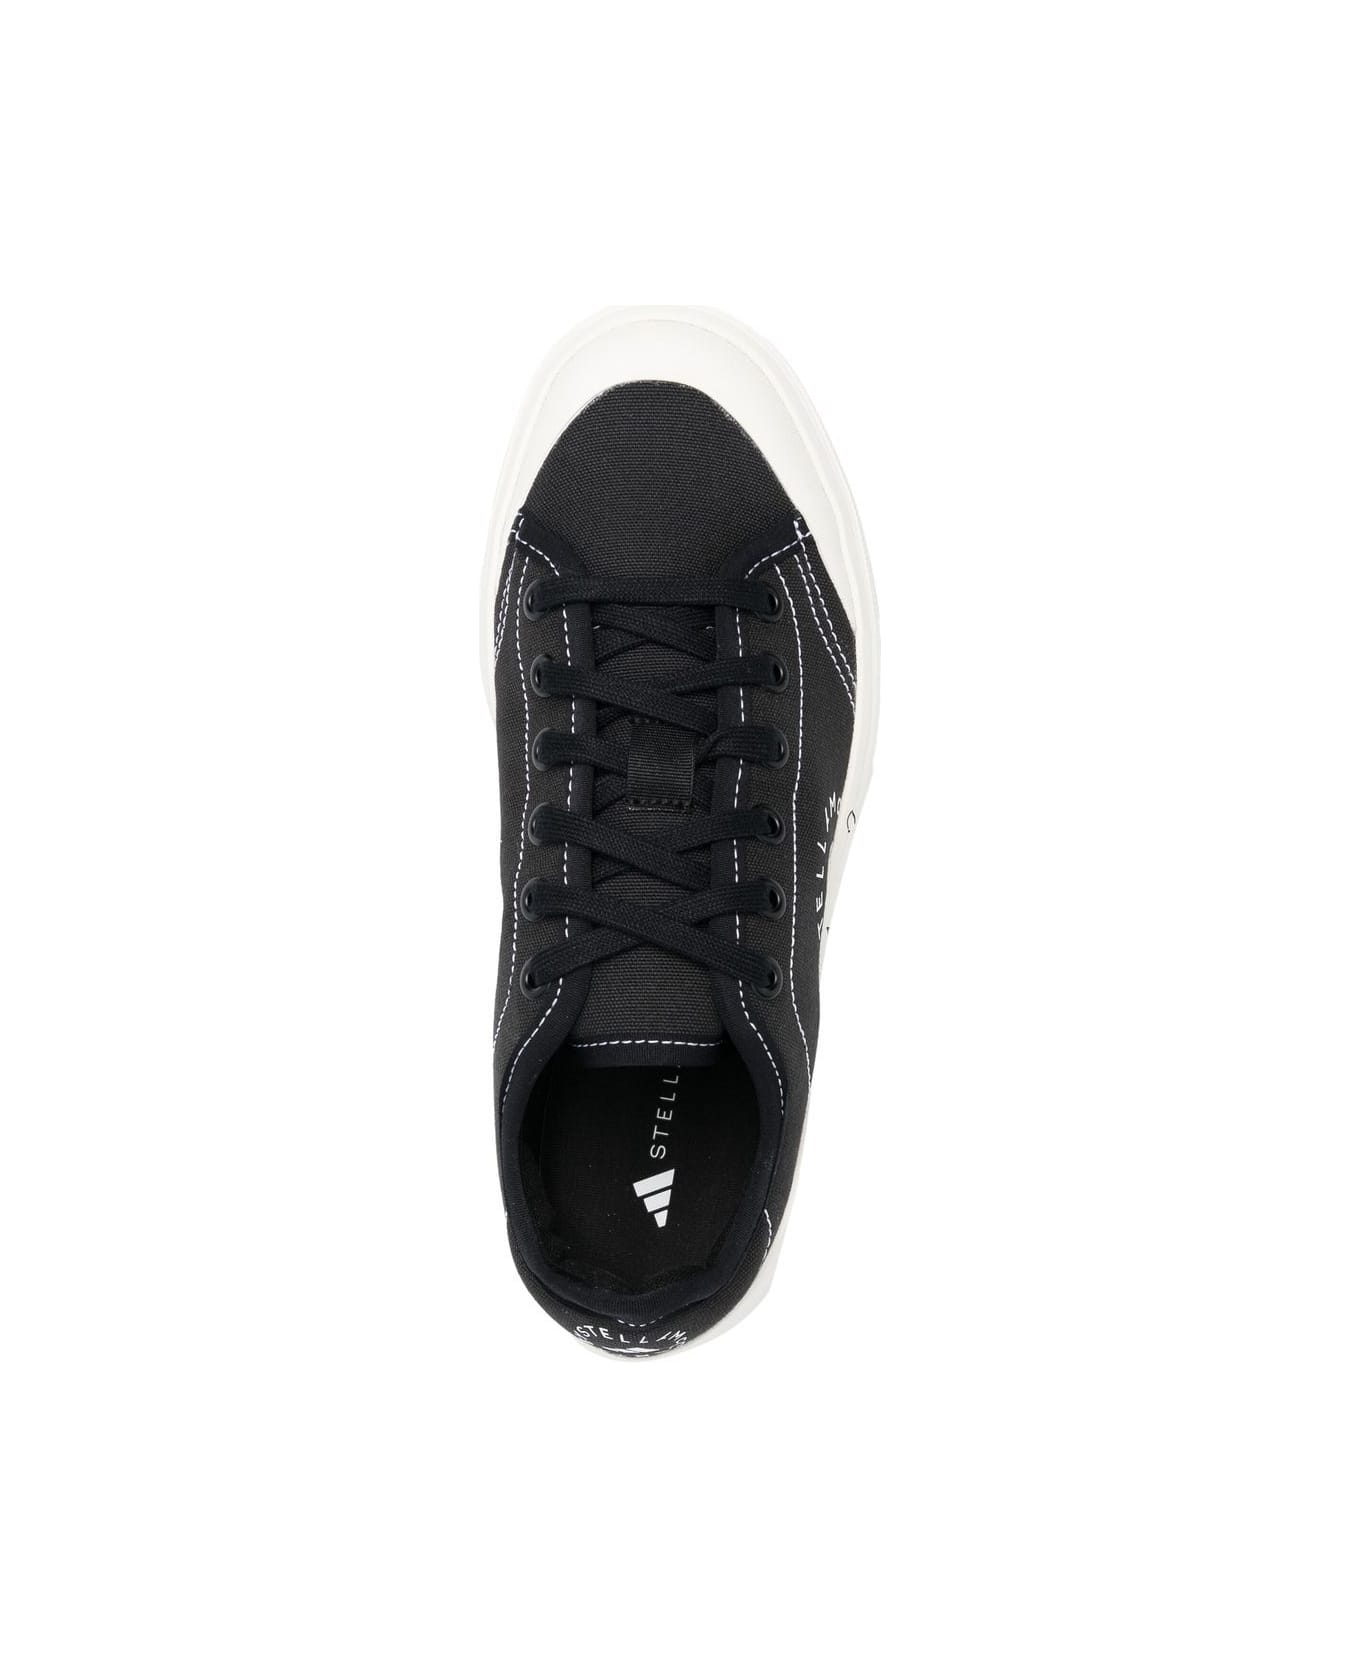 Adidas by Stella McCartney Asmc Court Sneakers - Cblack Cblack Owhite ウェッジシューズ